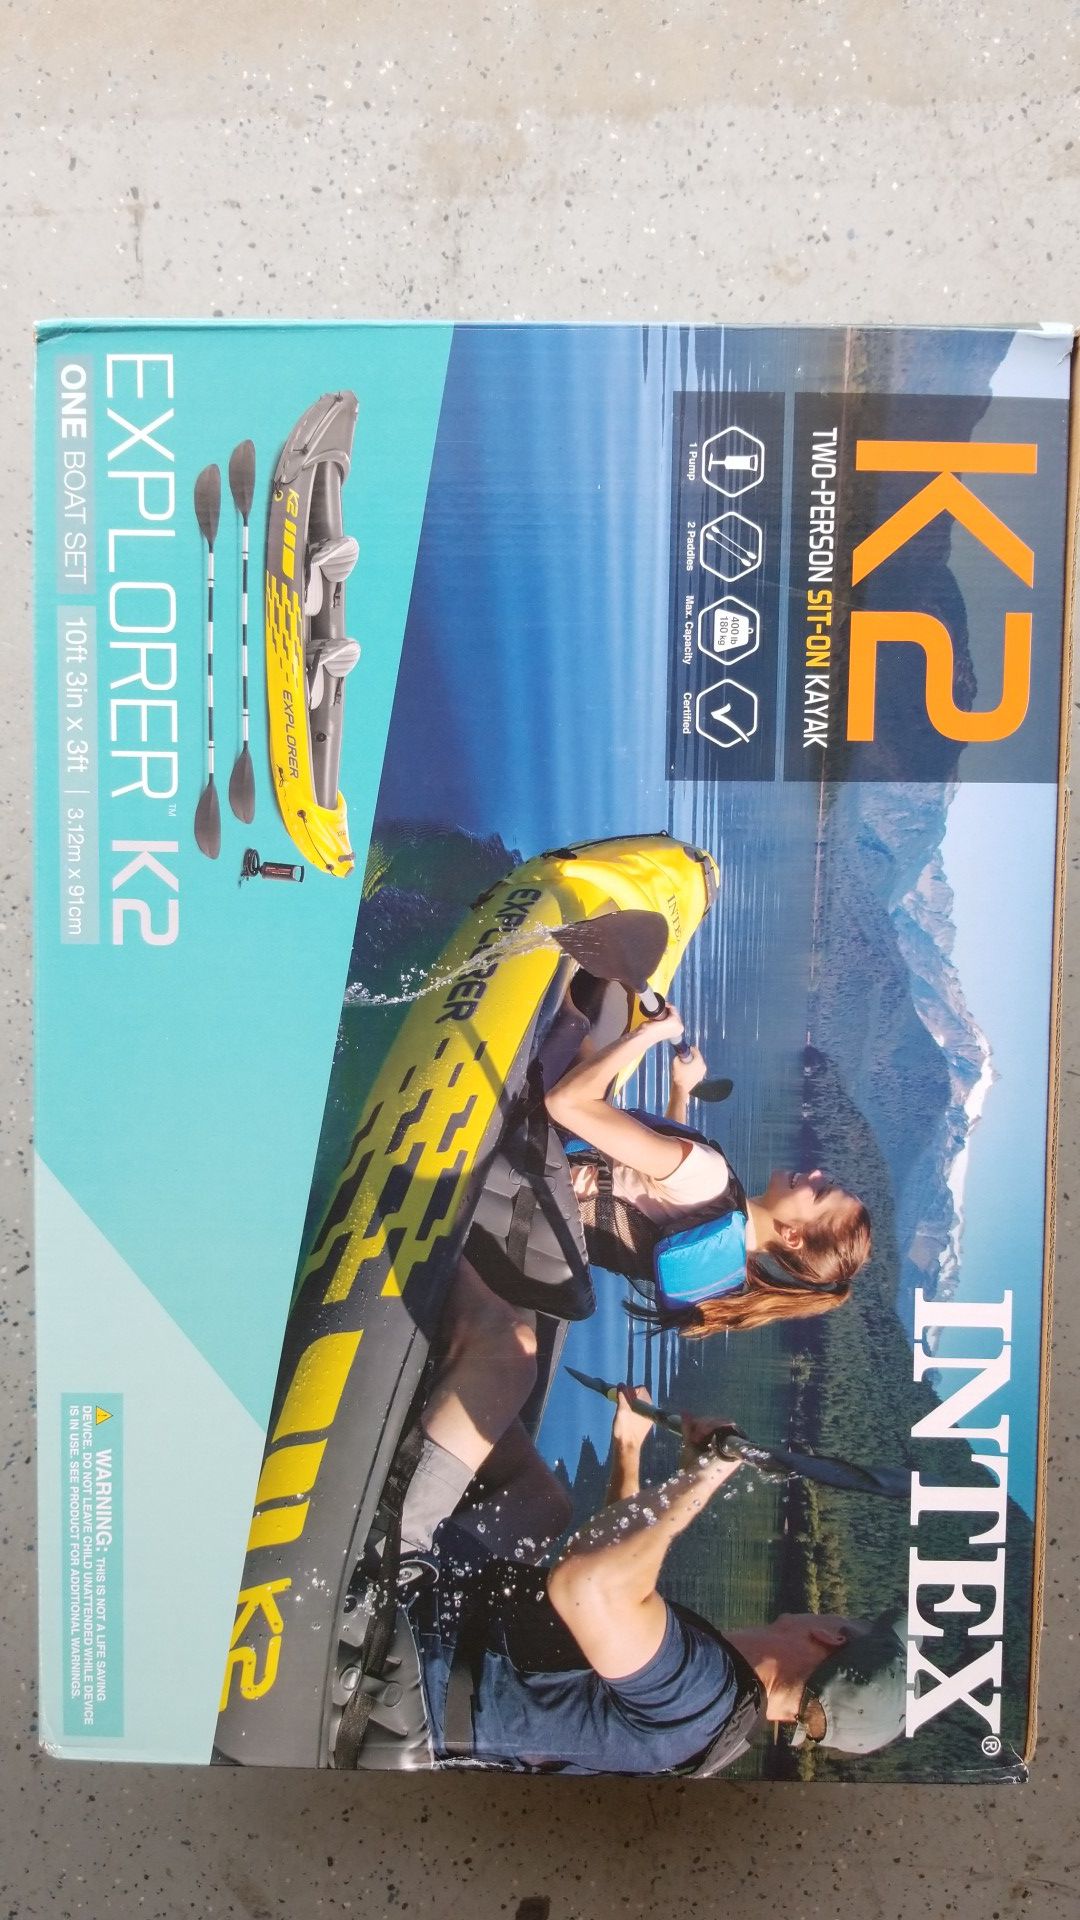 Intex K2 two person sit-in kayak